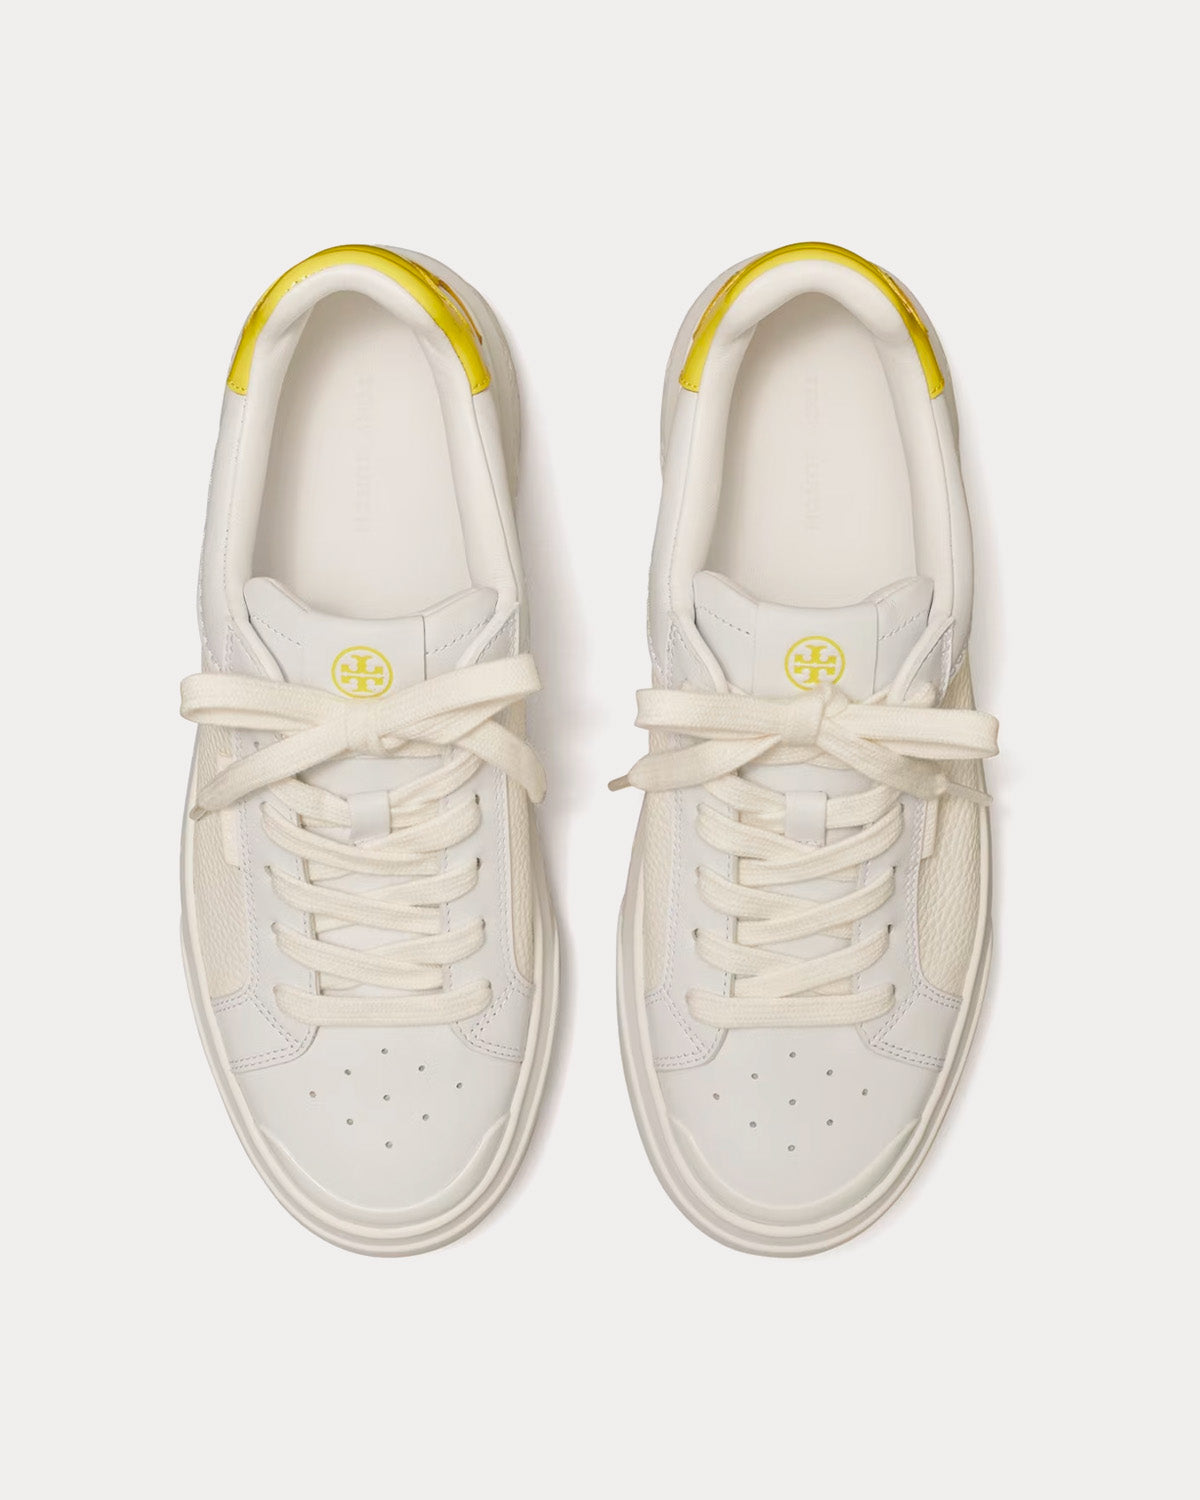 Tory Burch Ladybug Titanium White / Blazing Yellow Low Top Sneakers ...